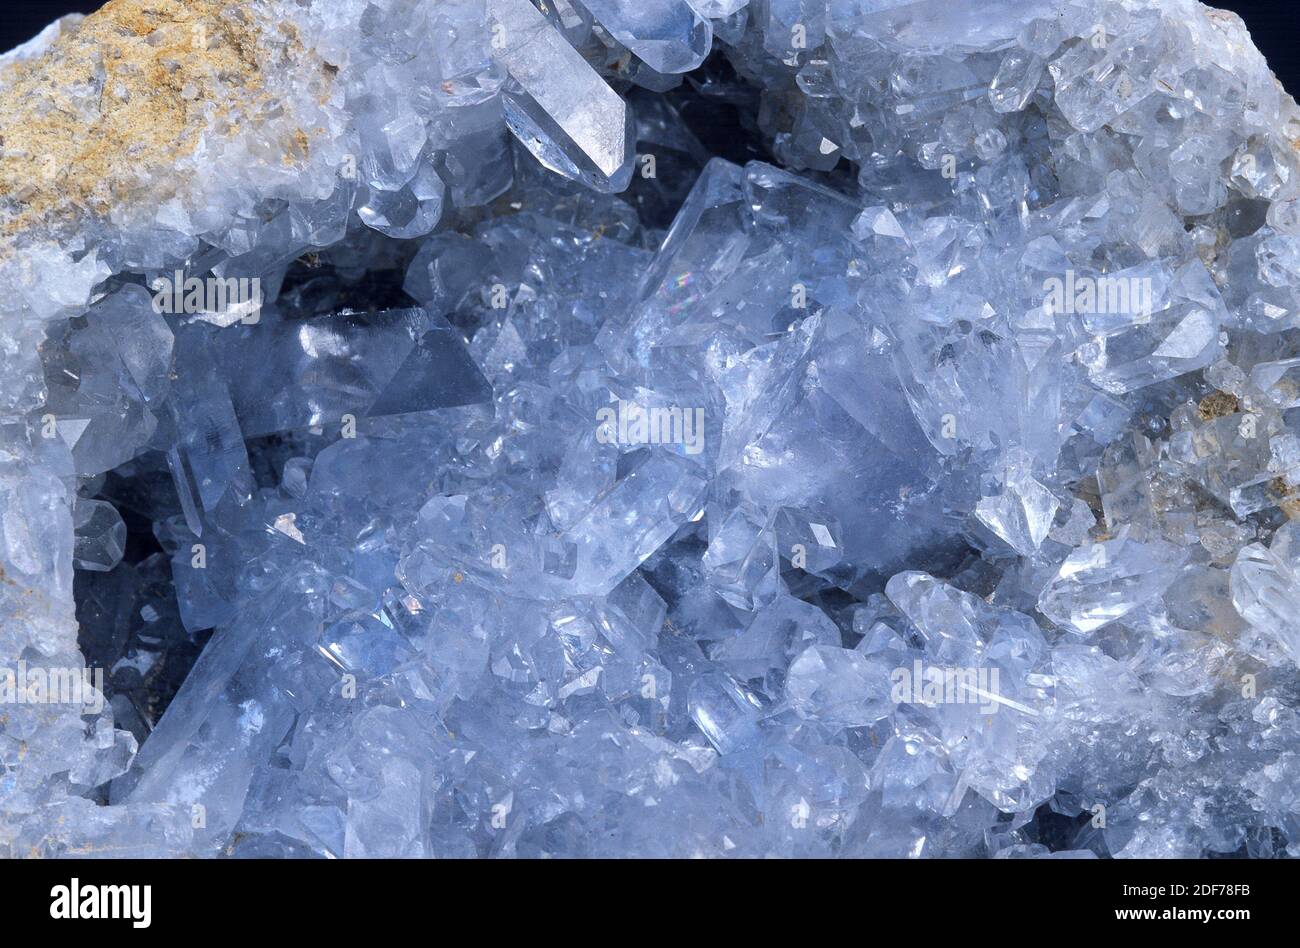 Celestine or celestite is a strontium sulfate mineral. Geode. Stock Photo